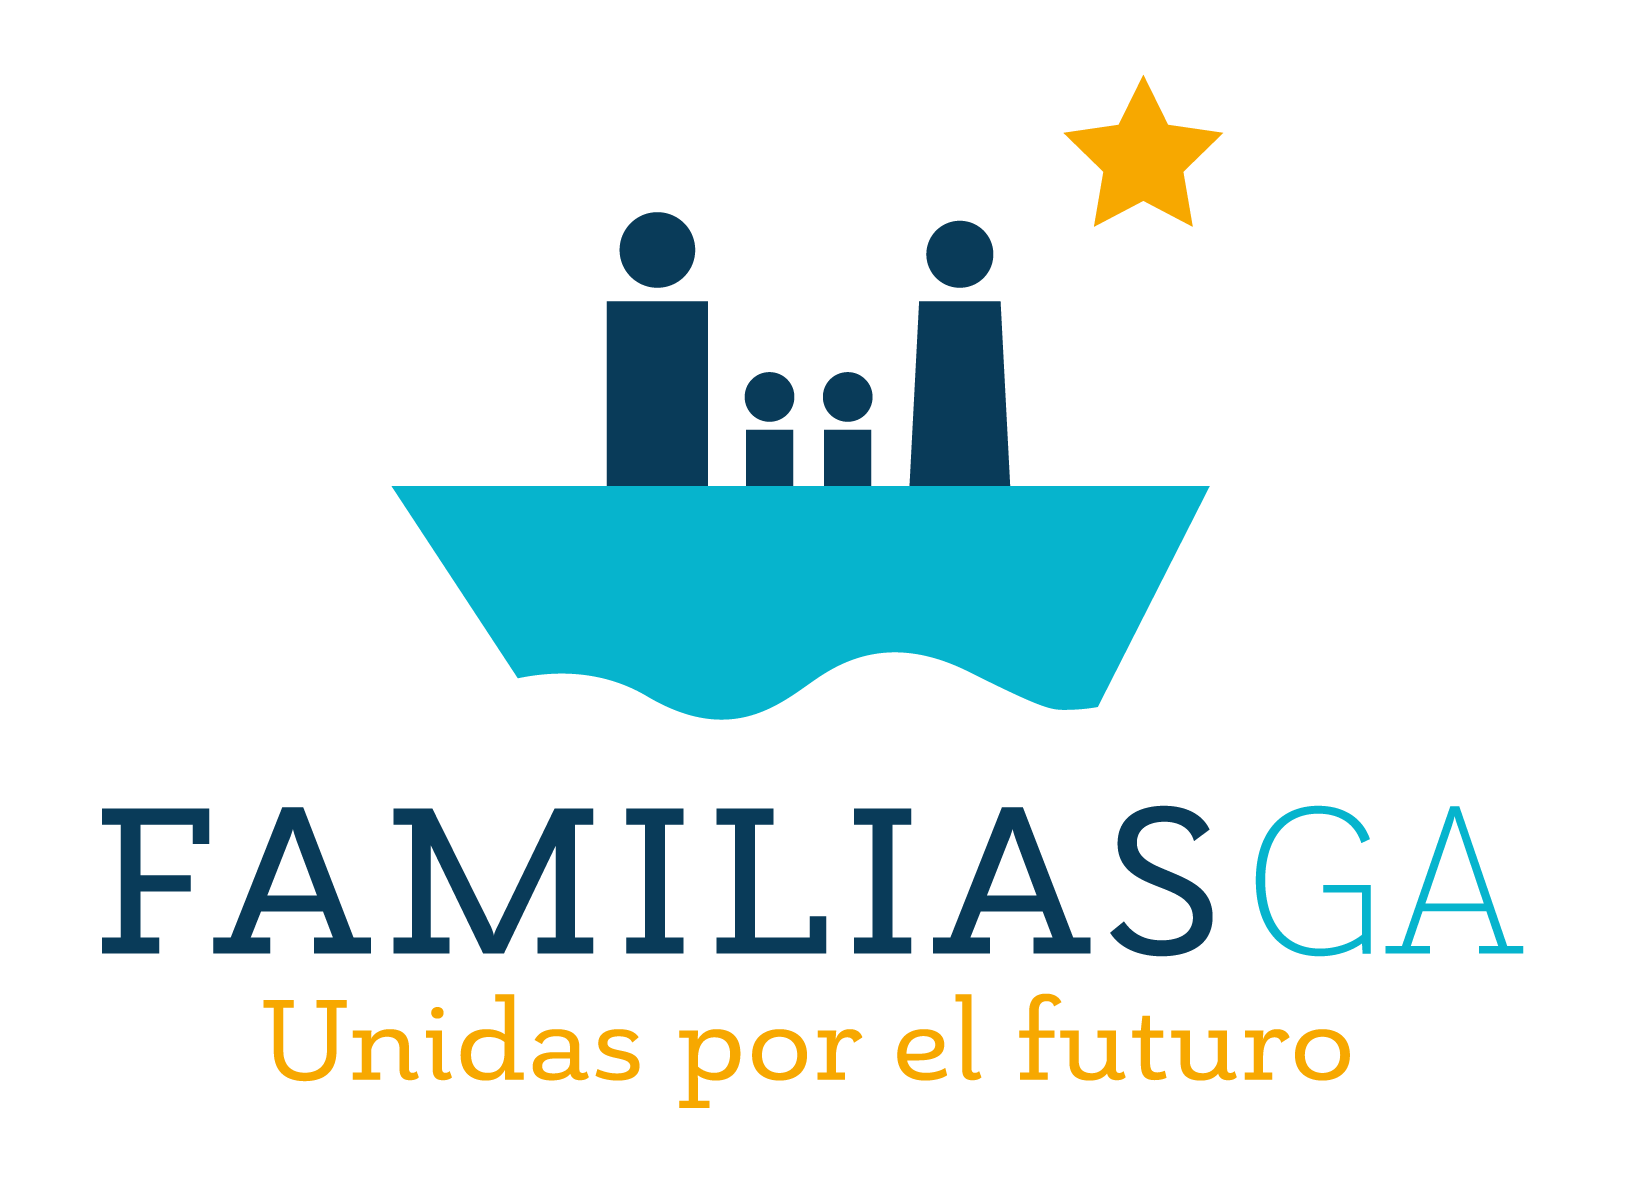 Familiasga logo 01